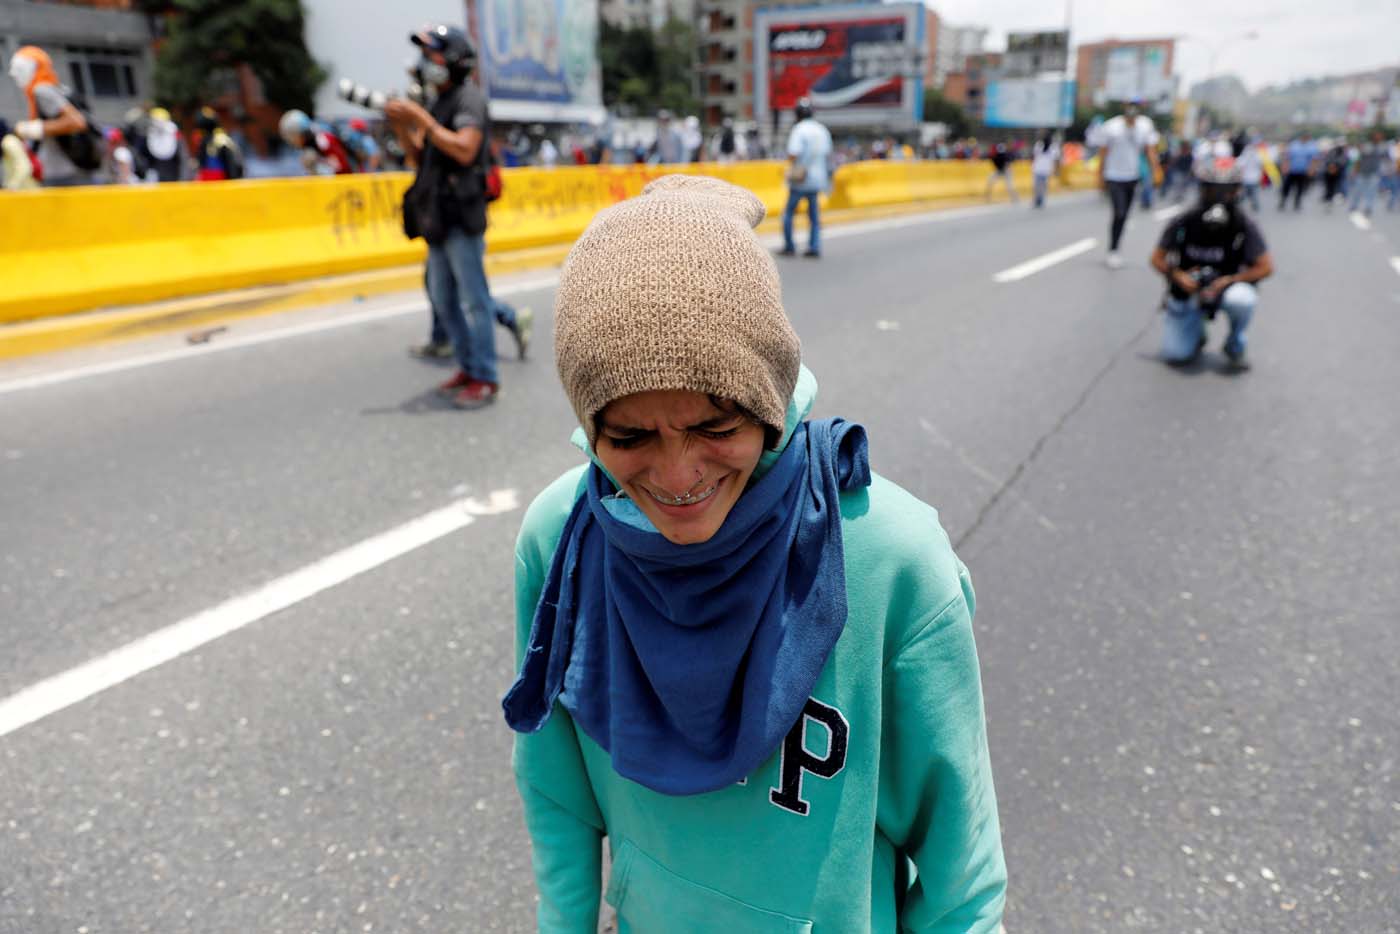 A demonstrator rallies against Venezuela's President Nicolas Maduro's government in Caracas, Venezuela April 10, 2017. REUTERS/Carlos Garcia Rawlins